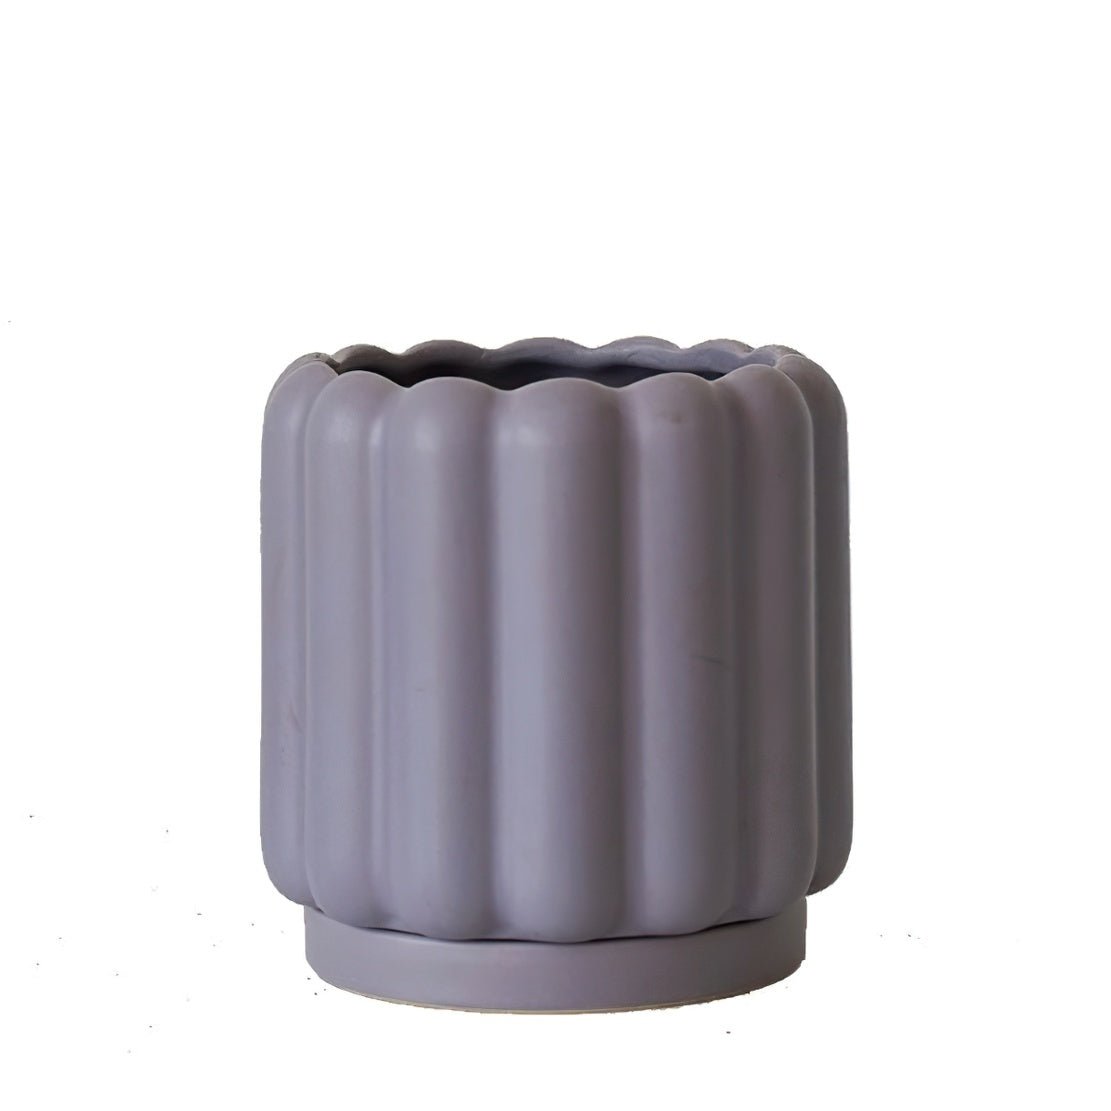 Purple, ceramic picket fence flowerpot vase